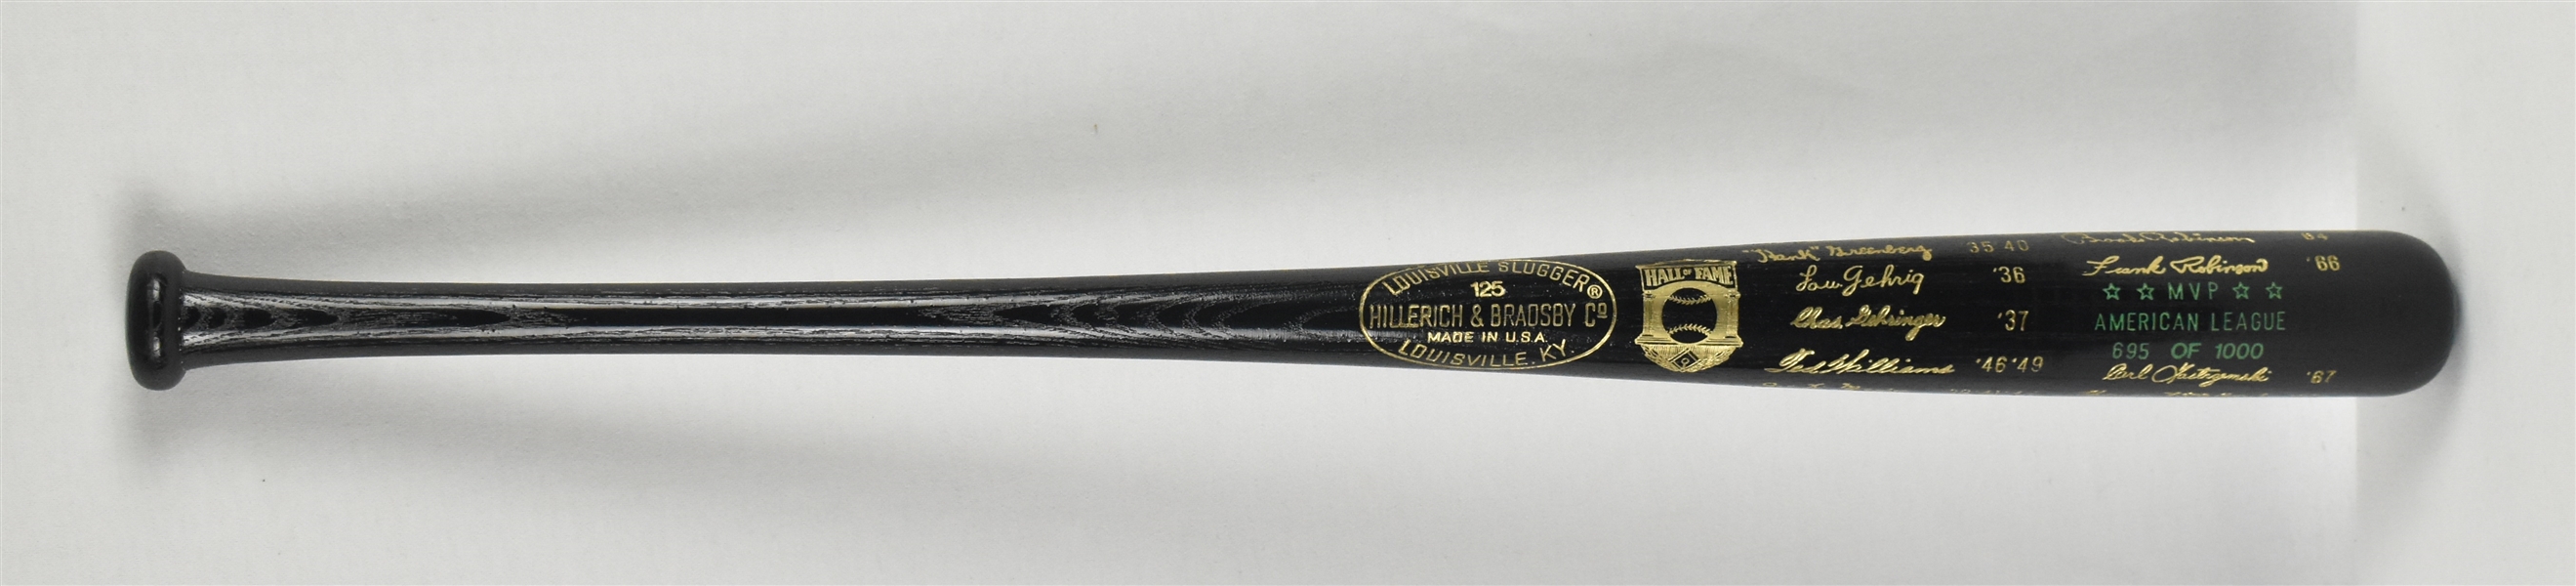 American League MVP Limited Edition Bat